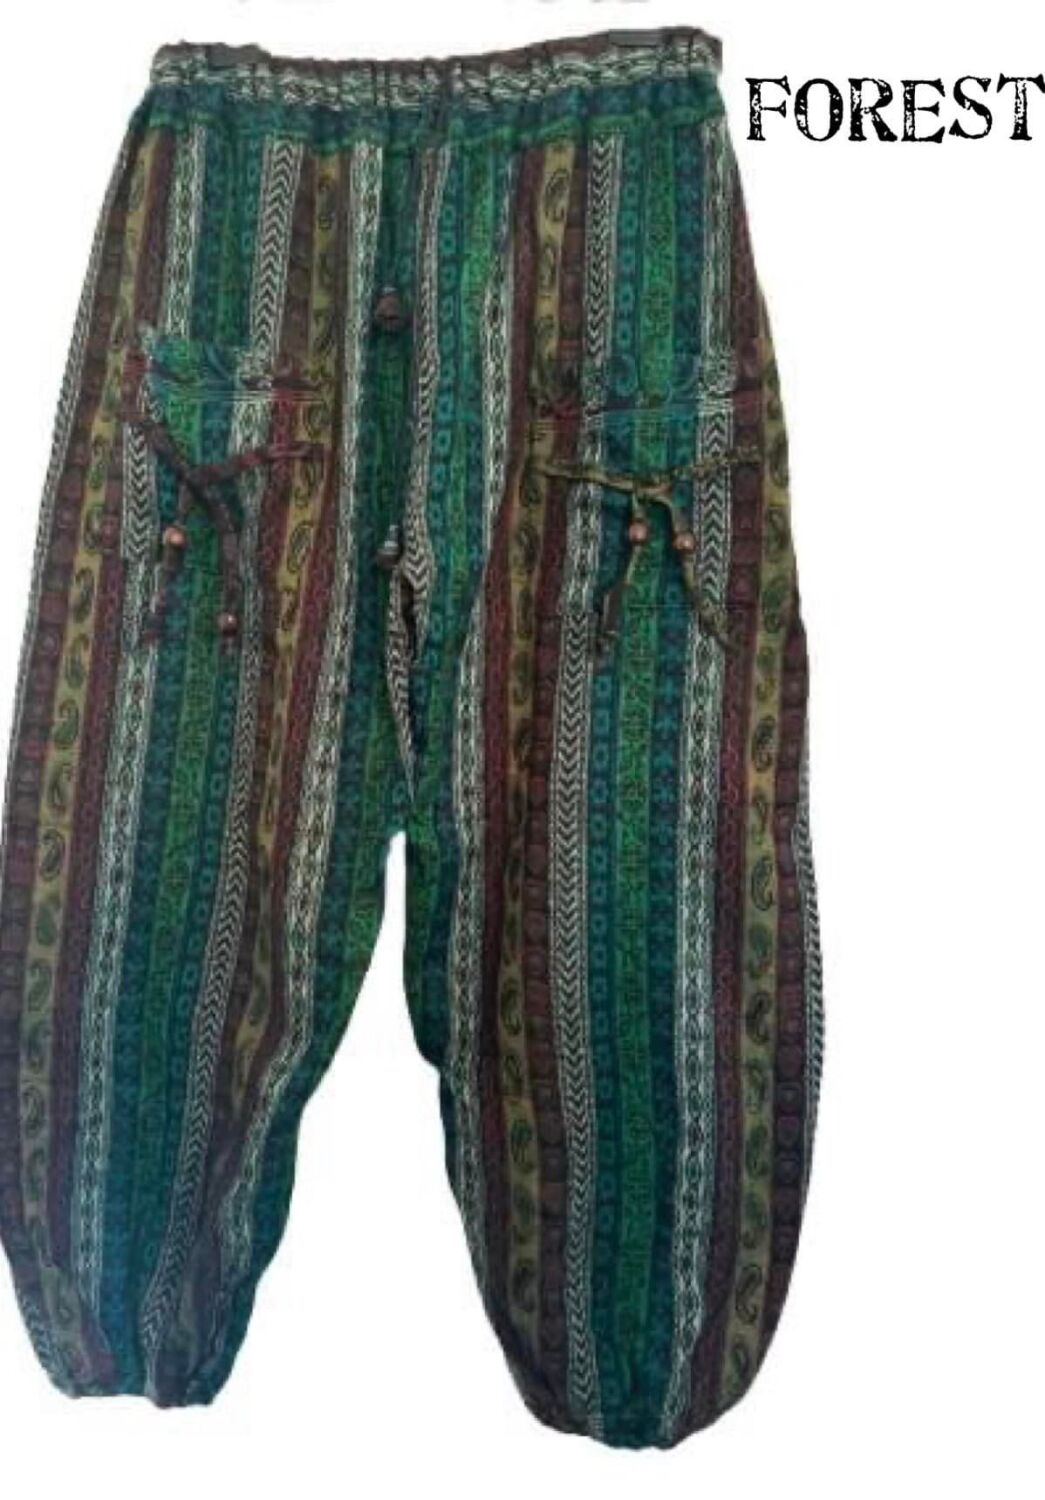 Cashmelon  harem trousers [New style] sizes 18-24